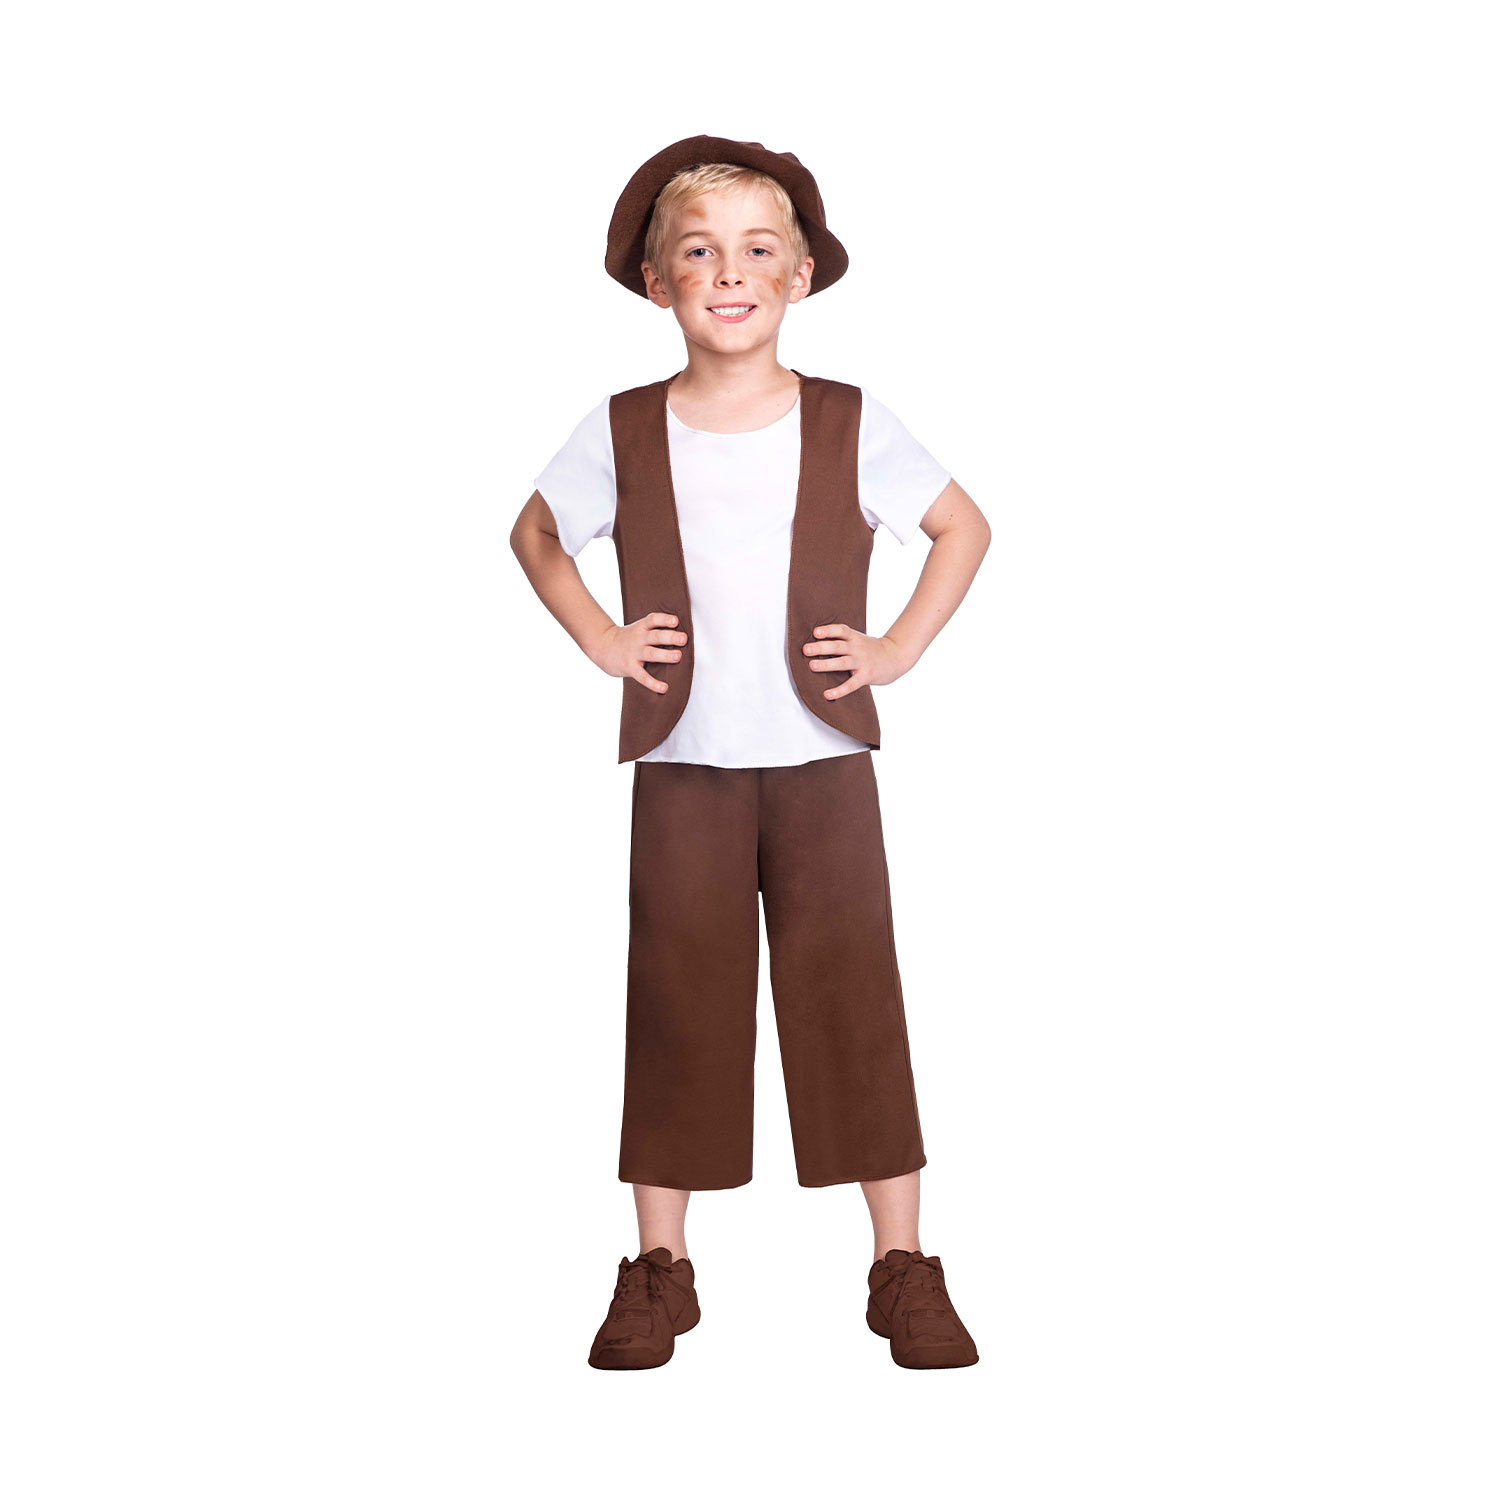 Poor Tudor Boy Costume - Size 10-12 Years - 1 PC : Amscan International